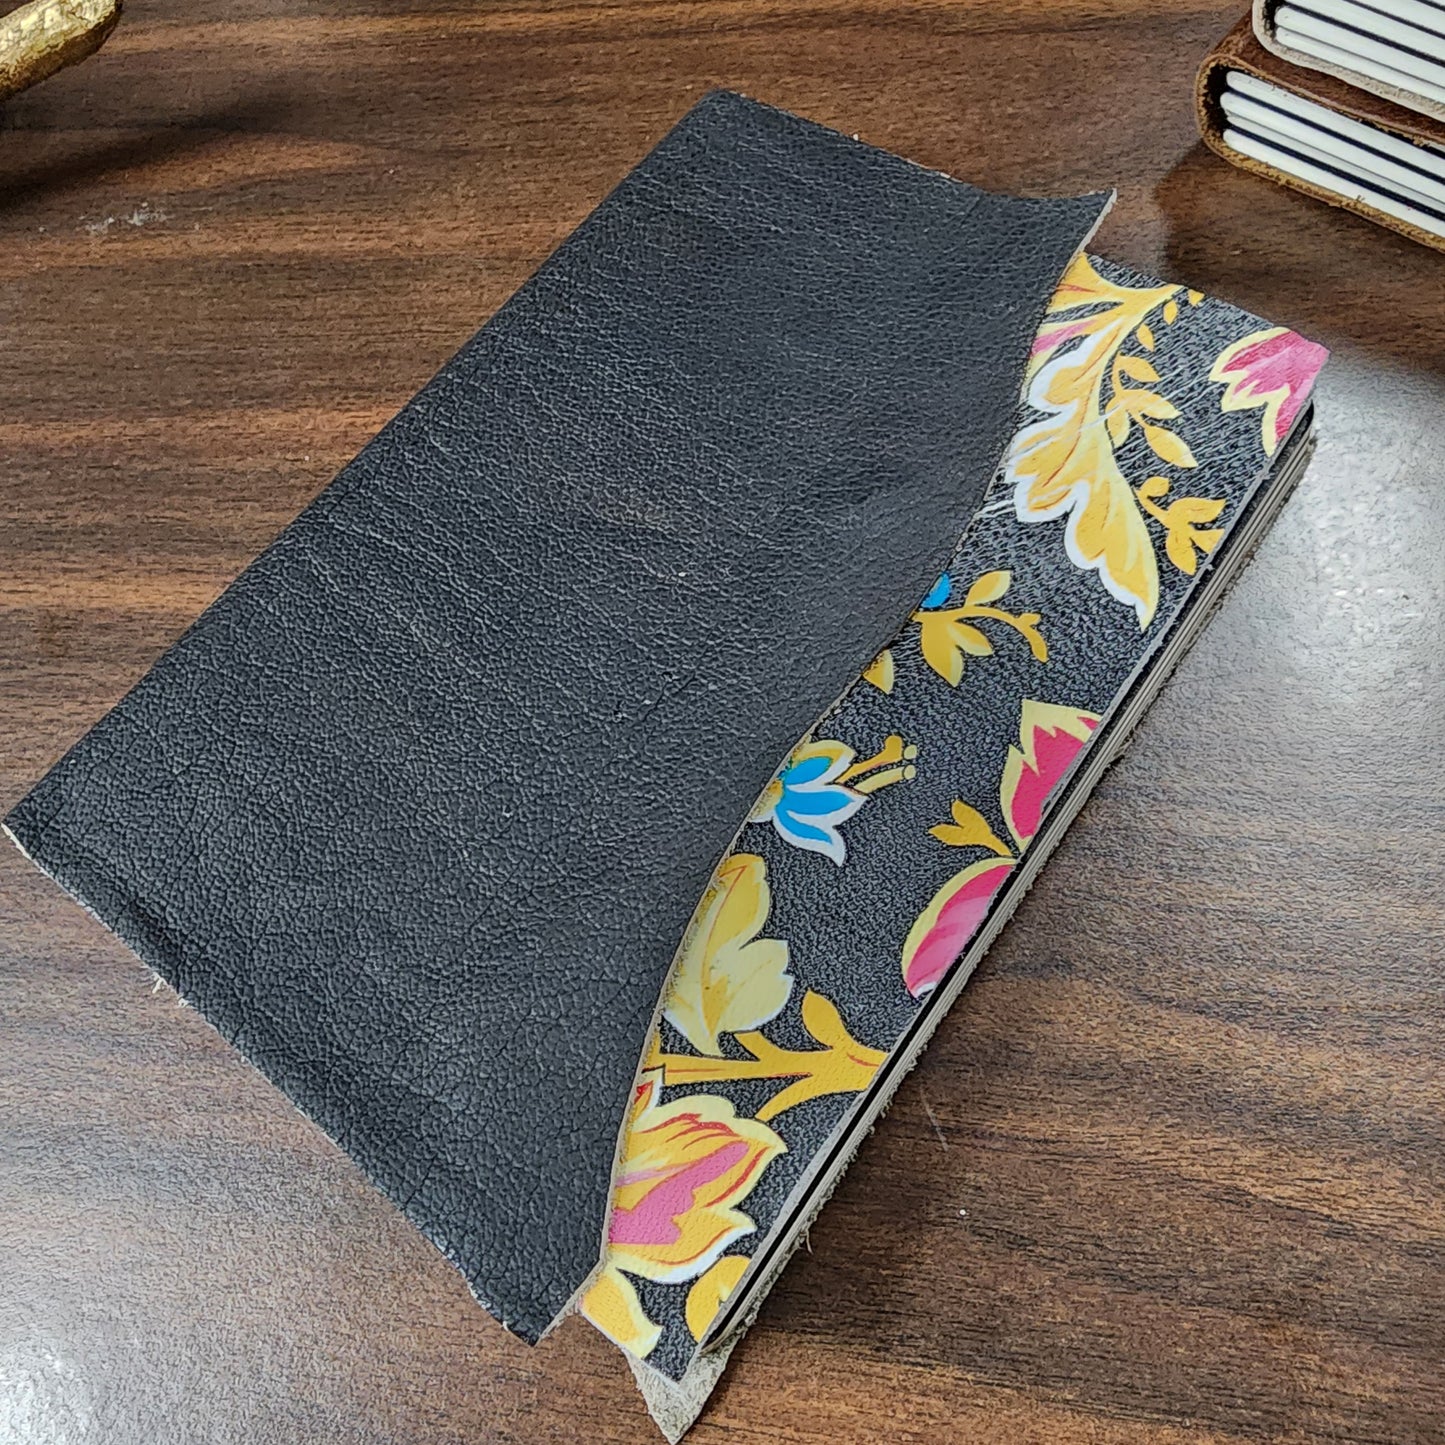 Handmade Leather Journals